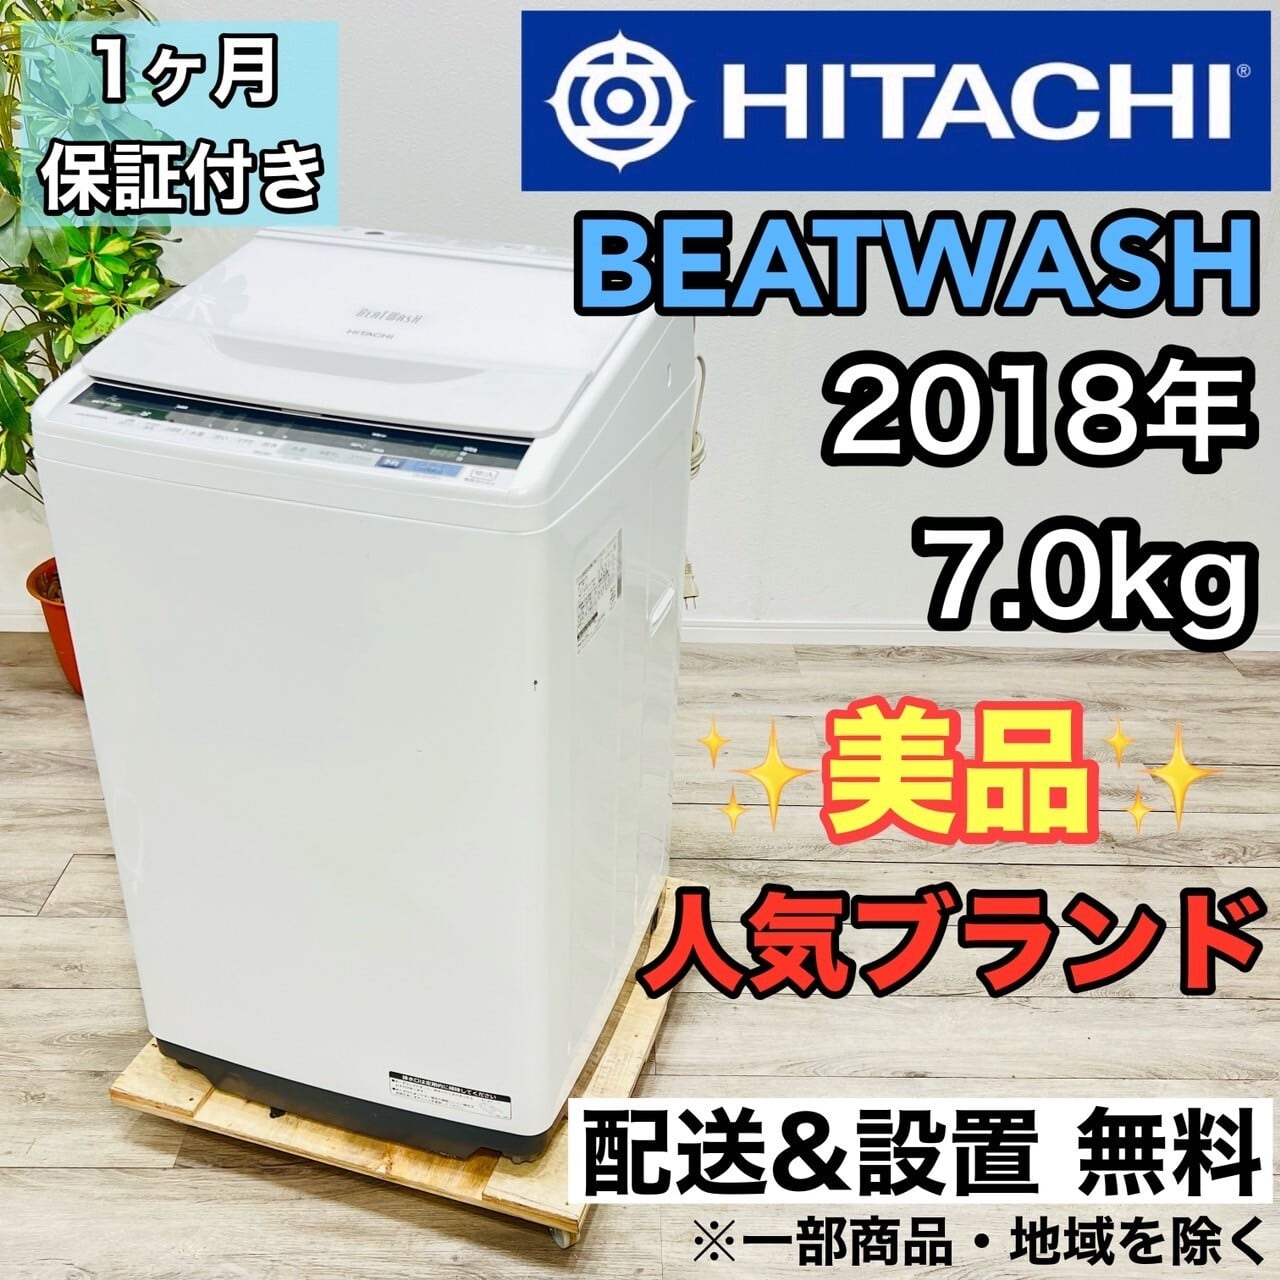 関西リユース本舗♦️HITACHI a1862 洗濯機 7.0kg 2018年製 9♦️